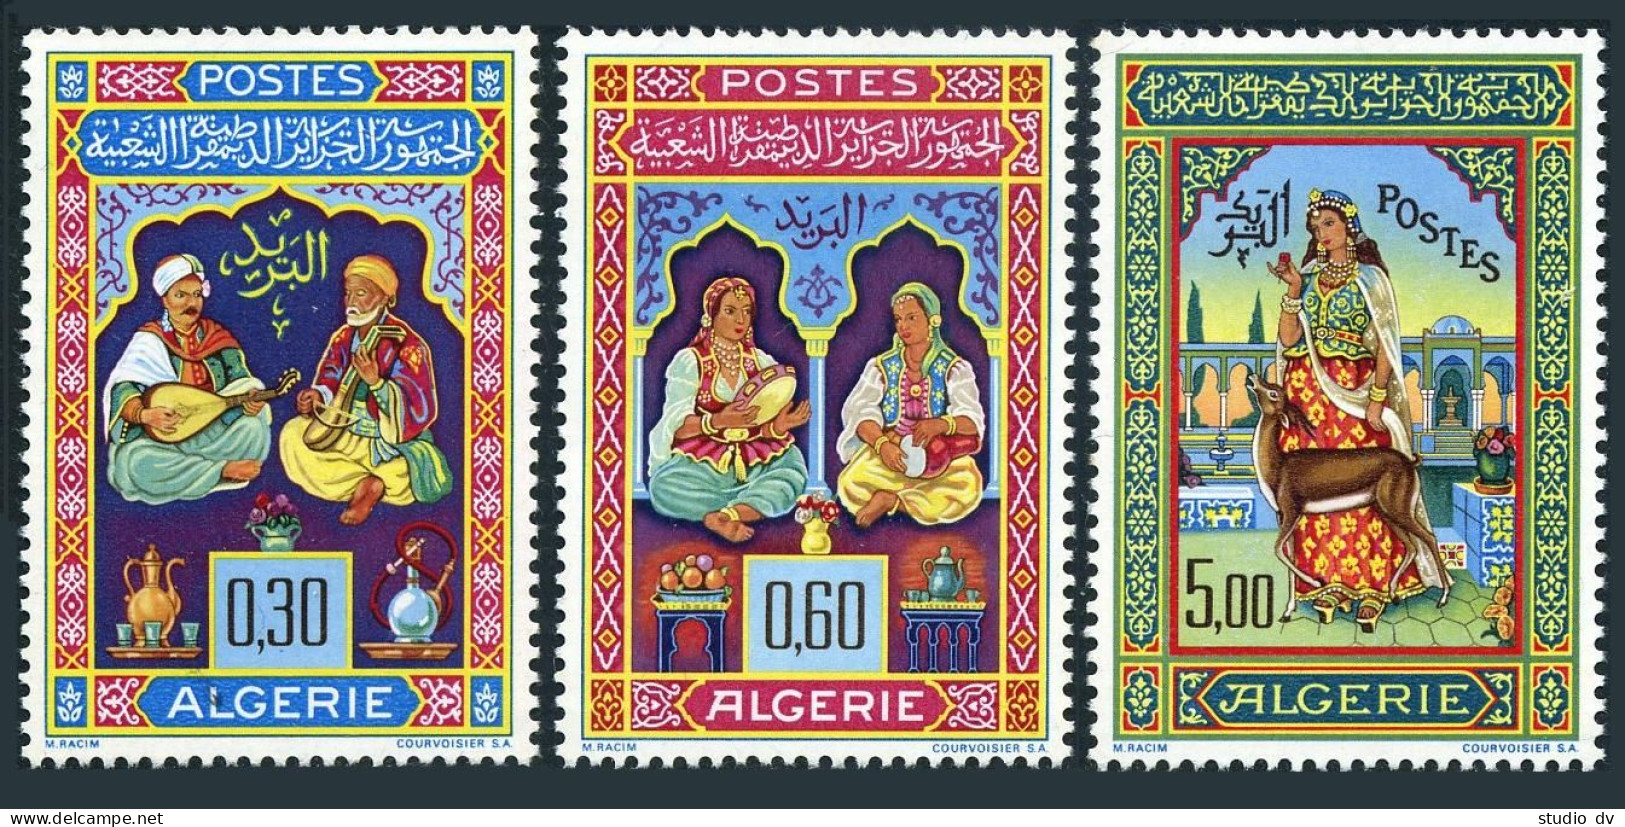 Algeria 341-343, MNH. Michel 441-443. Miniatures By Mohammed Racim, 1965 - Algerije (1962-...)